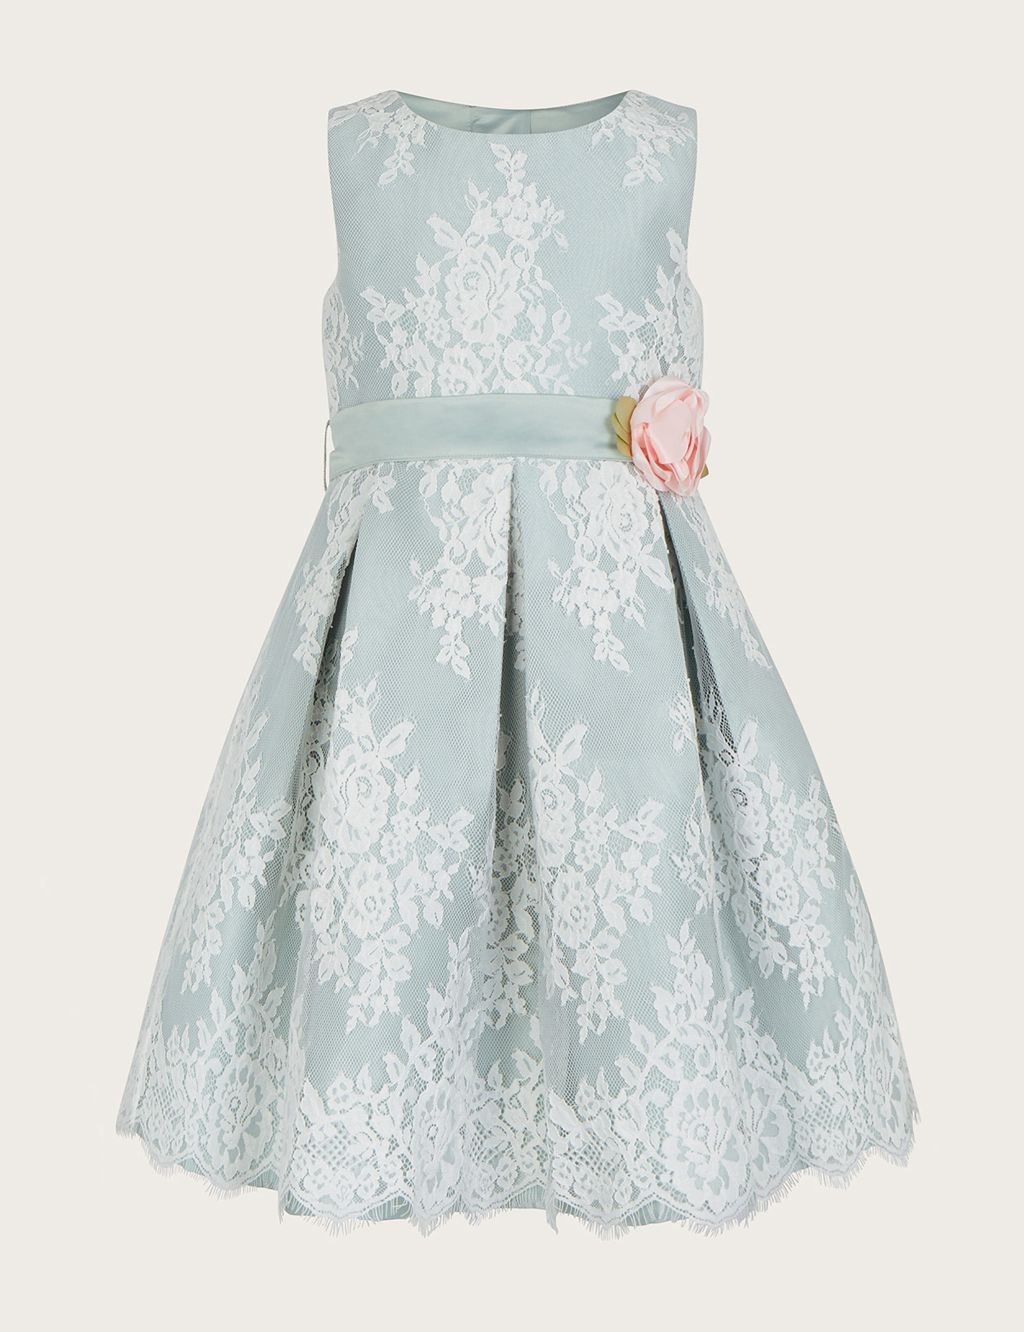 Lace Occasion Dress (3-15 Yrs)